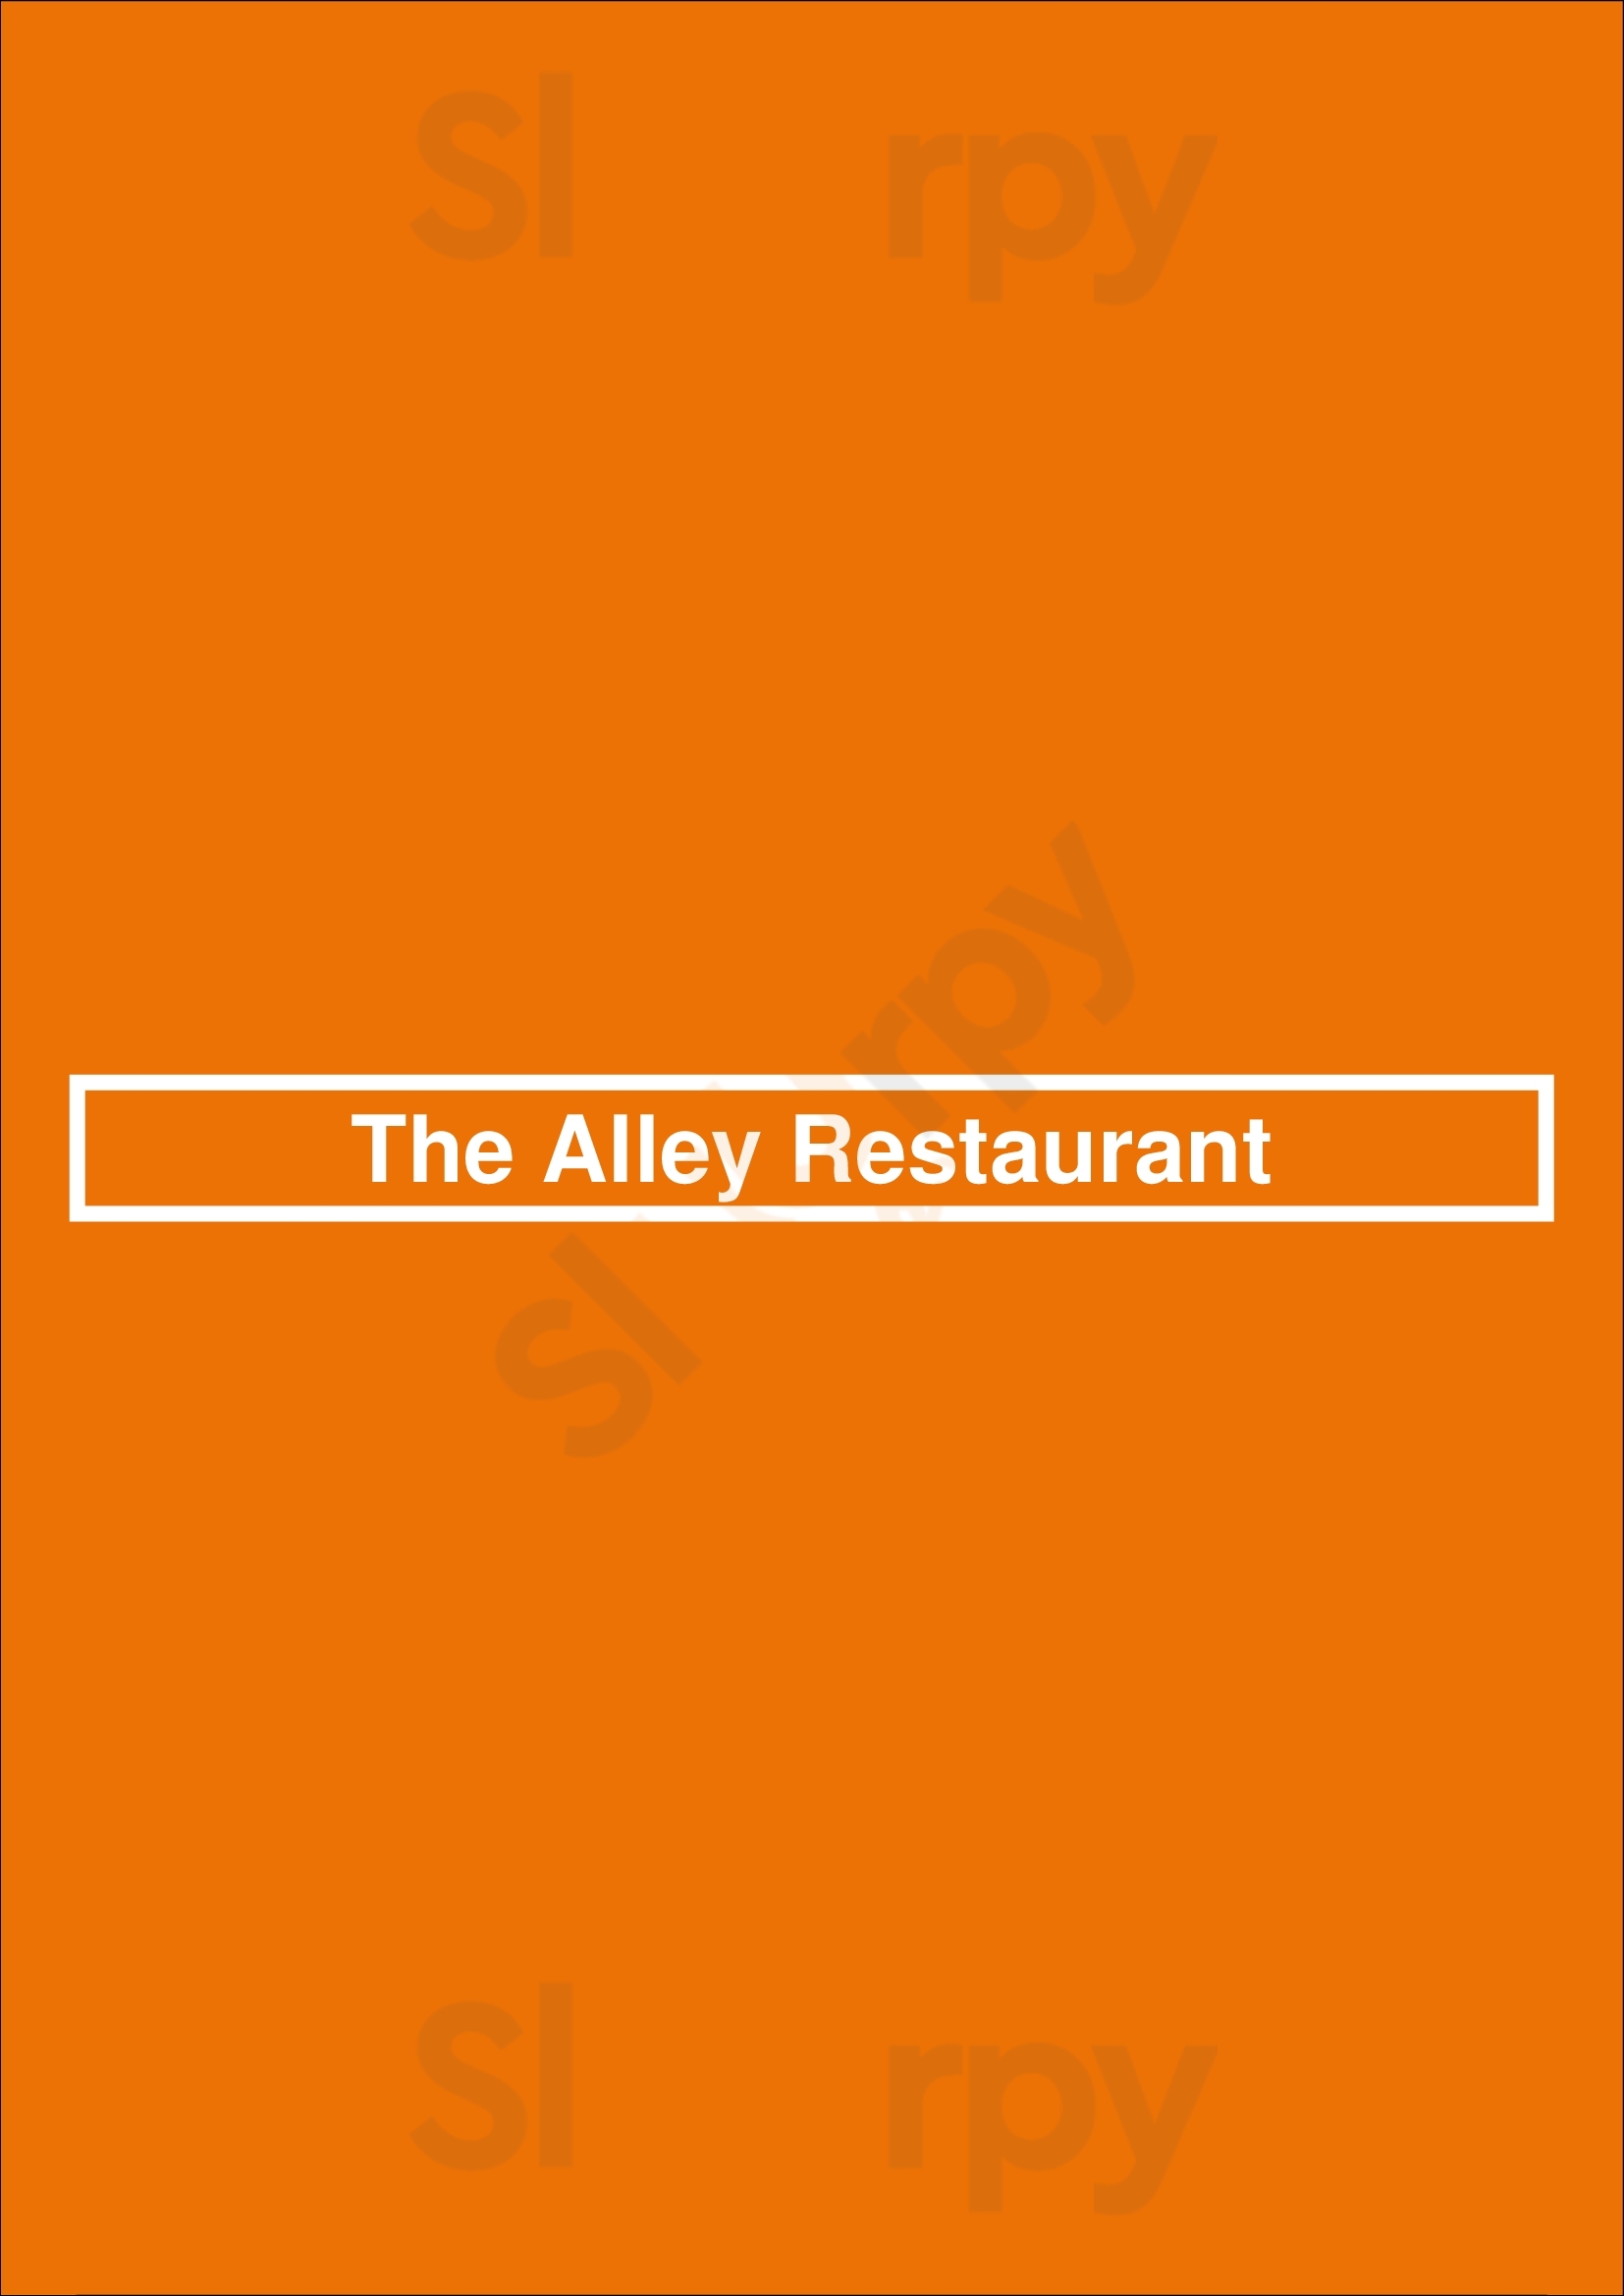 The Alley Restaurant Newport Beach Menu - 1